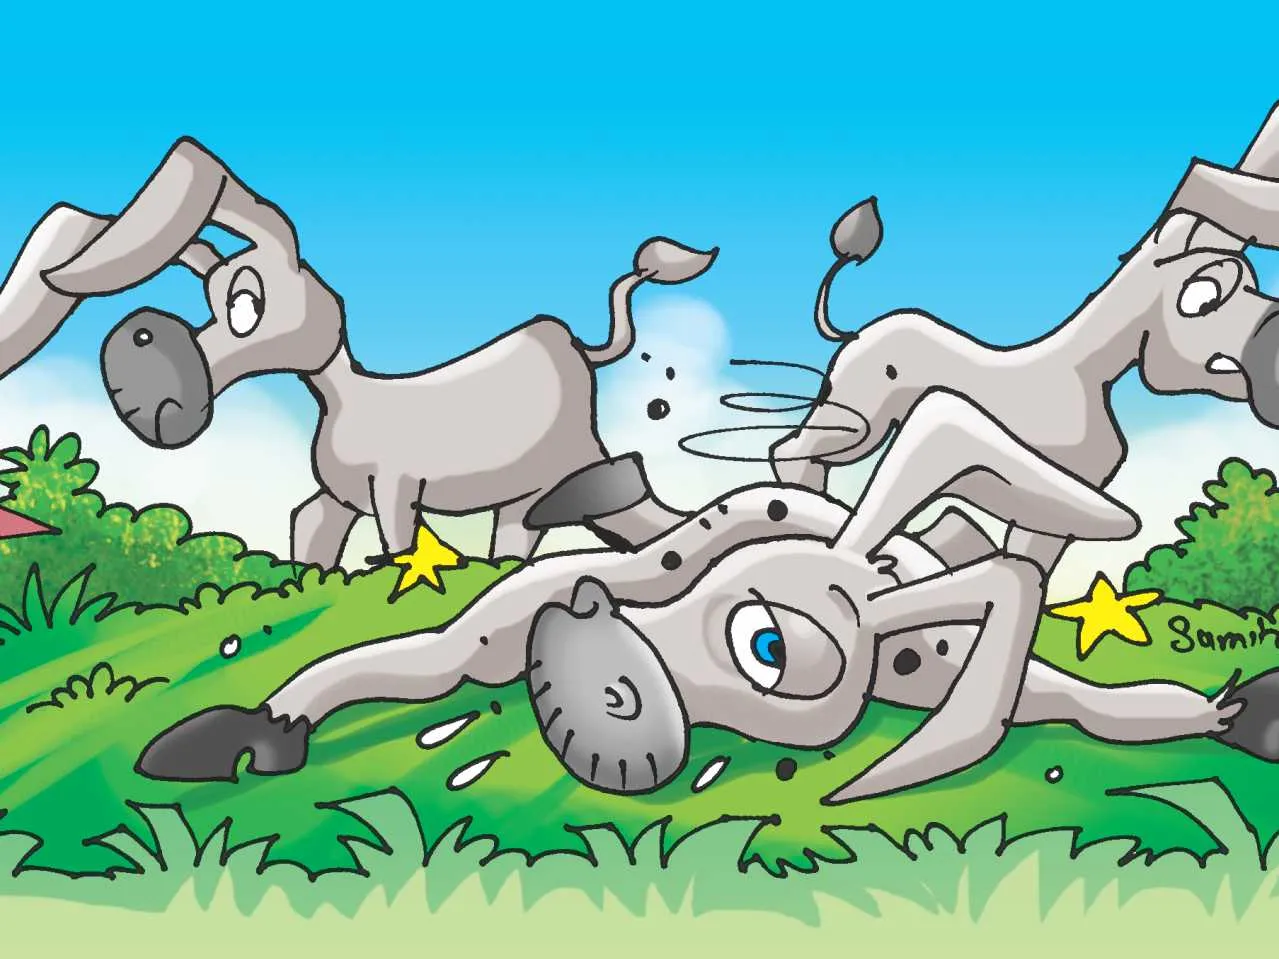 Donkeys running Cartoon image